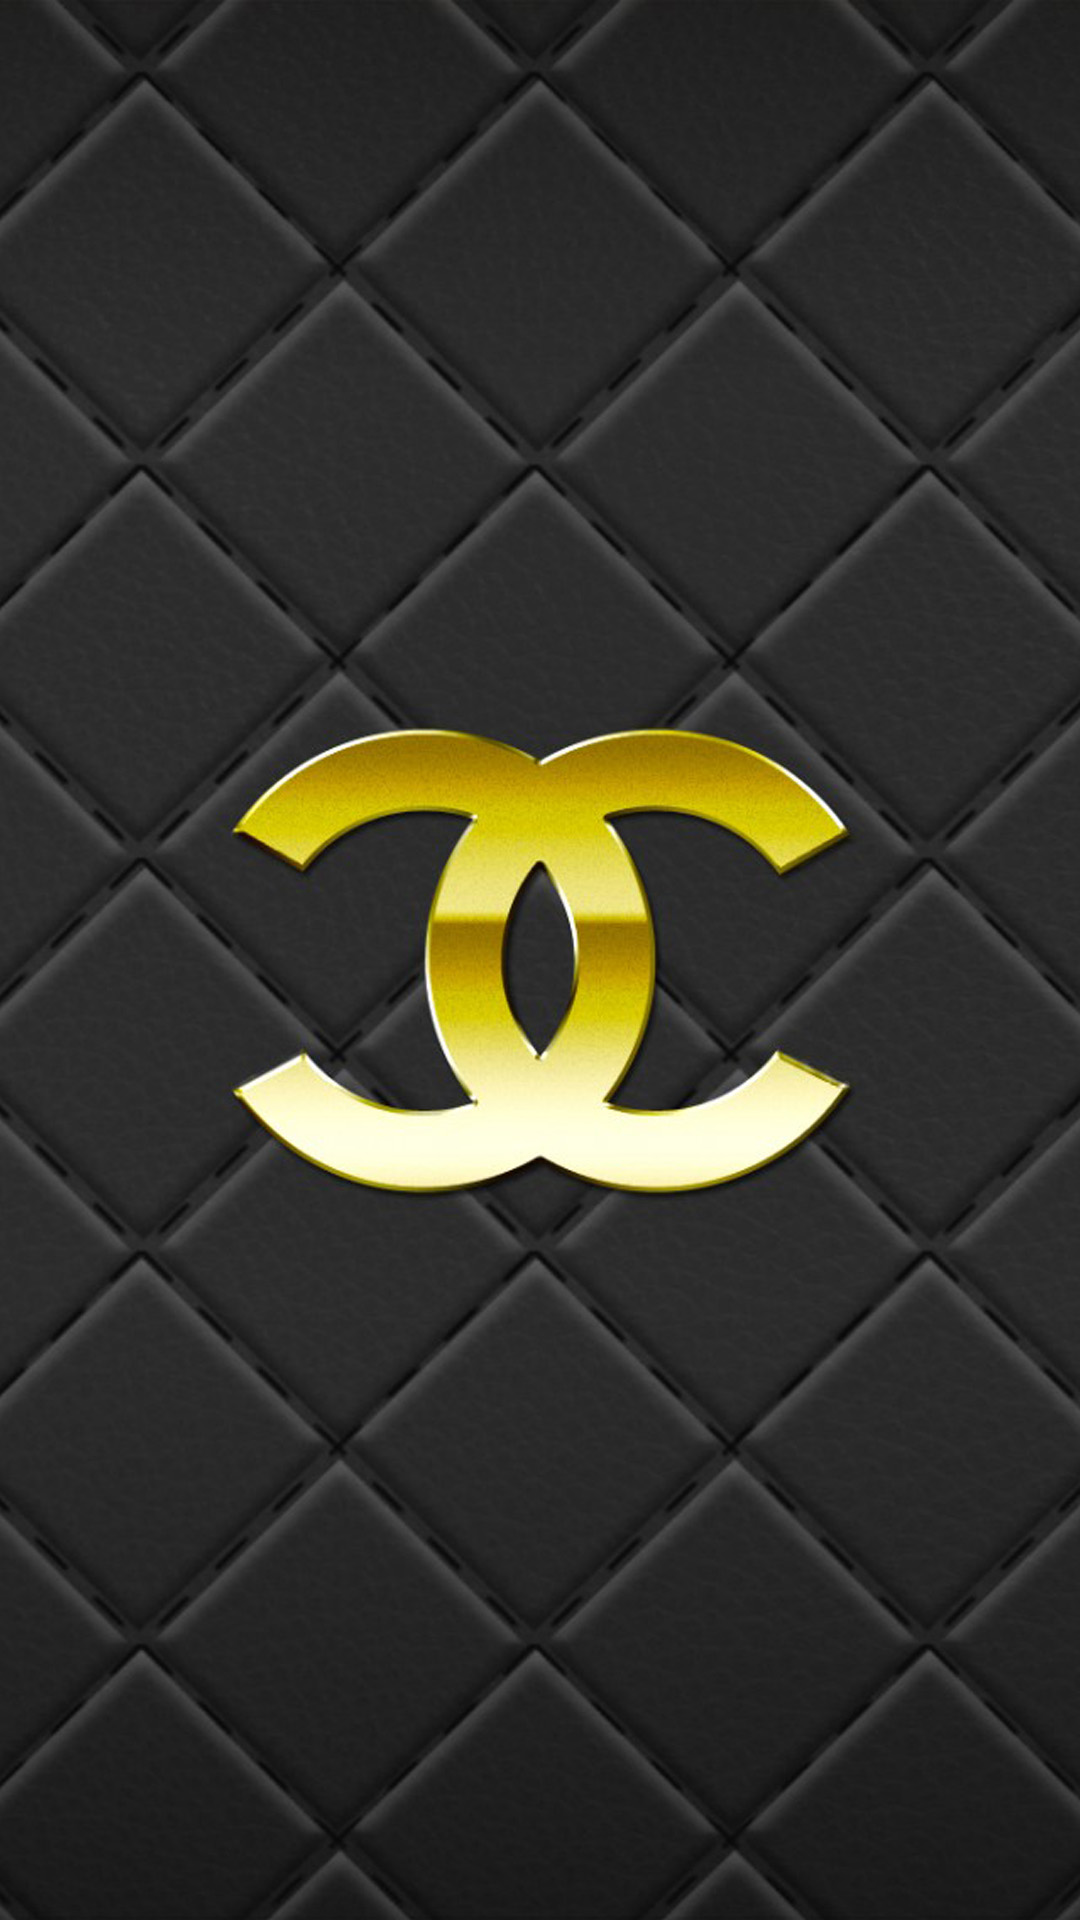 CHANEL logo | iPhone Wallpaper